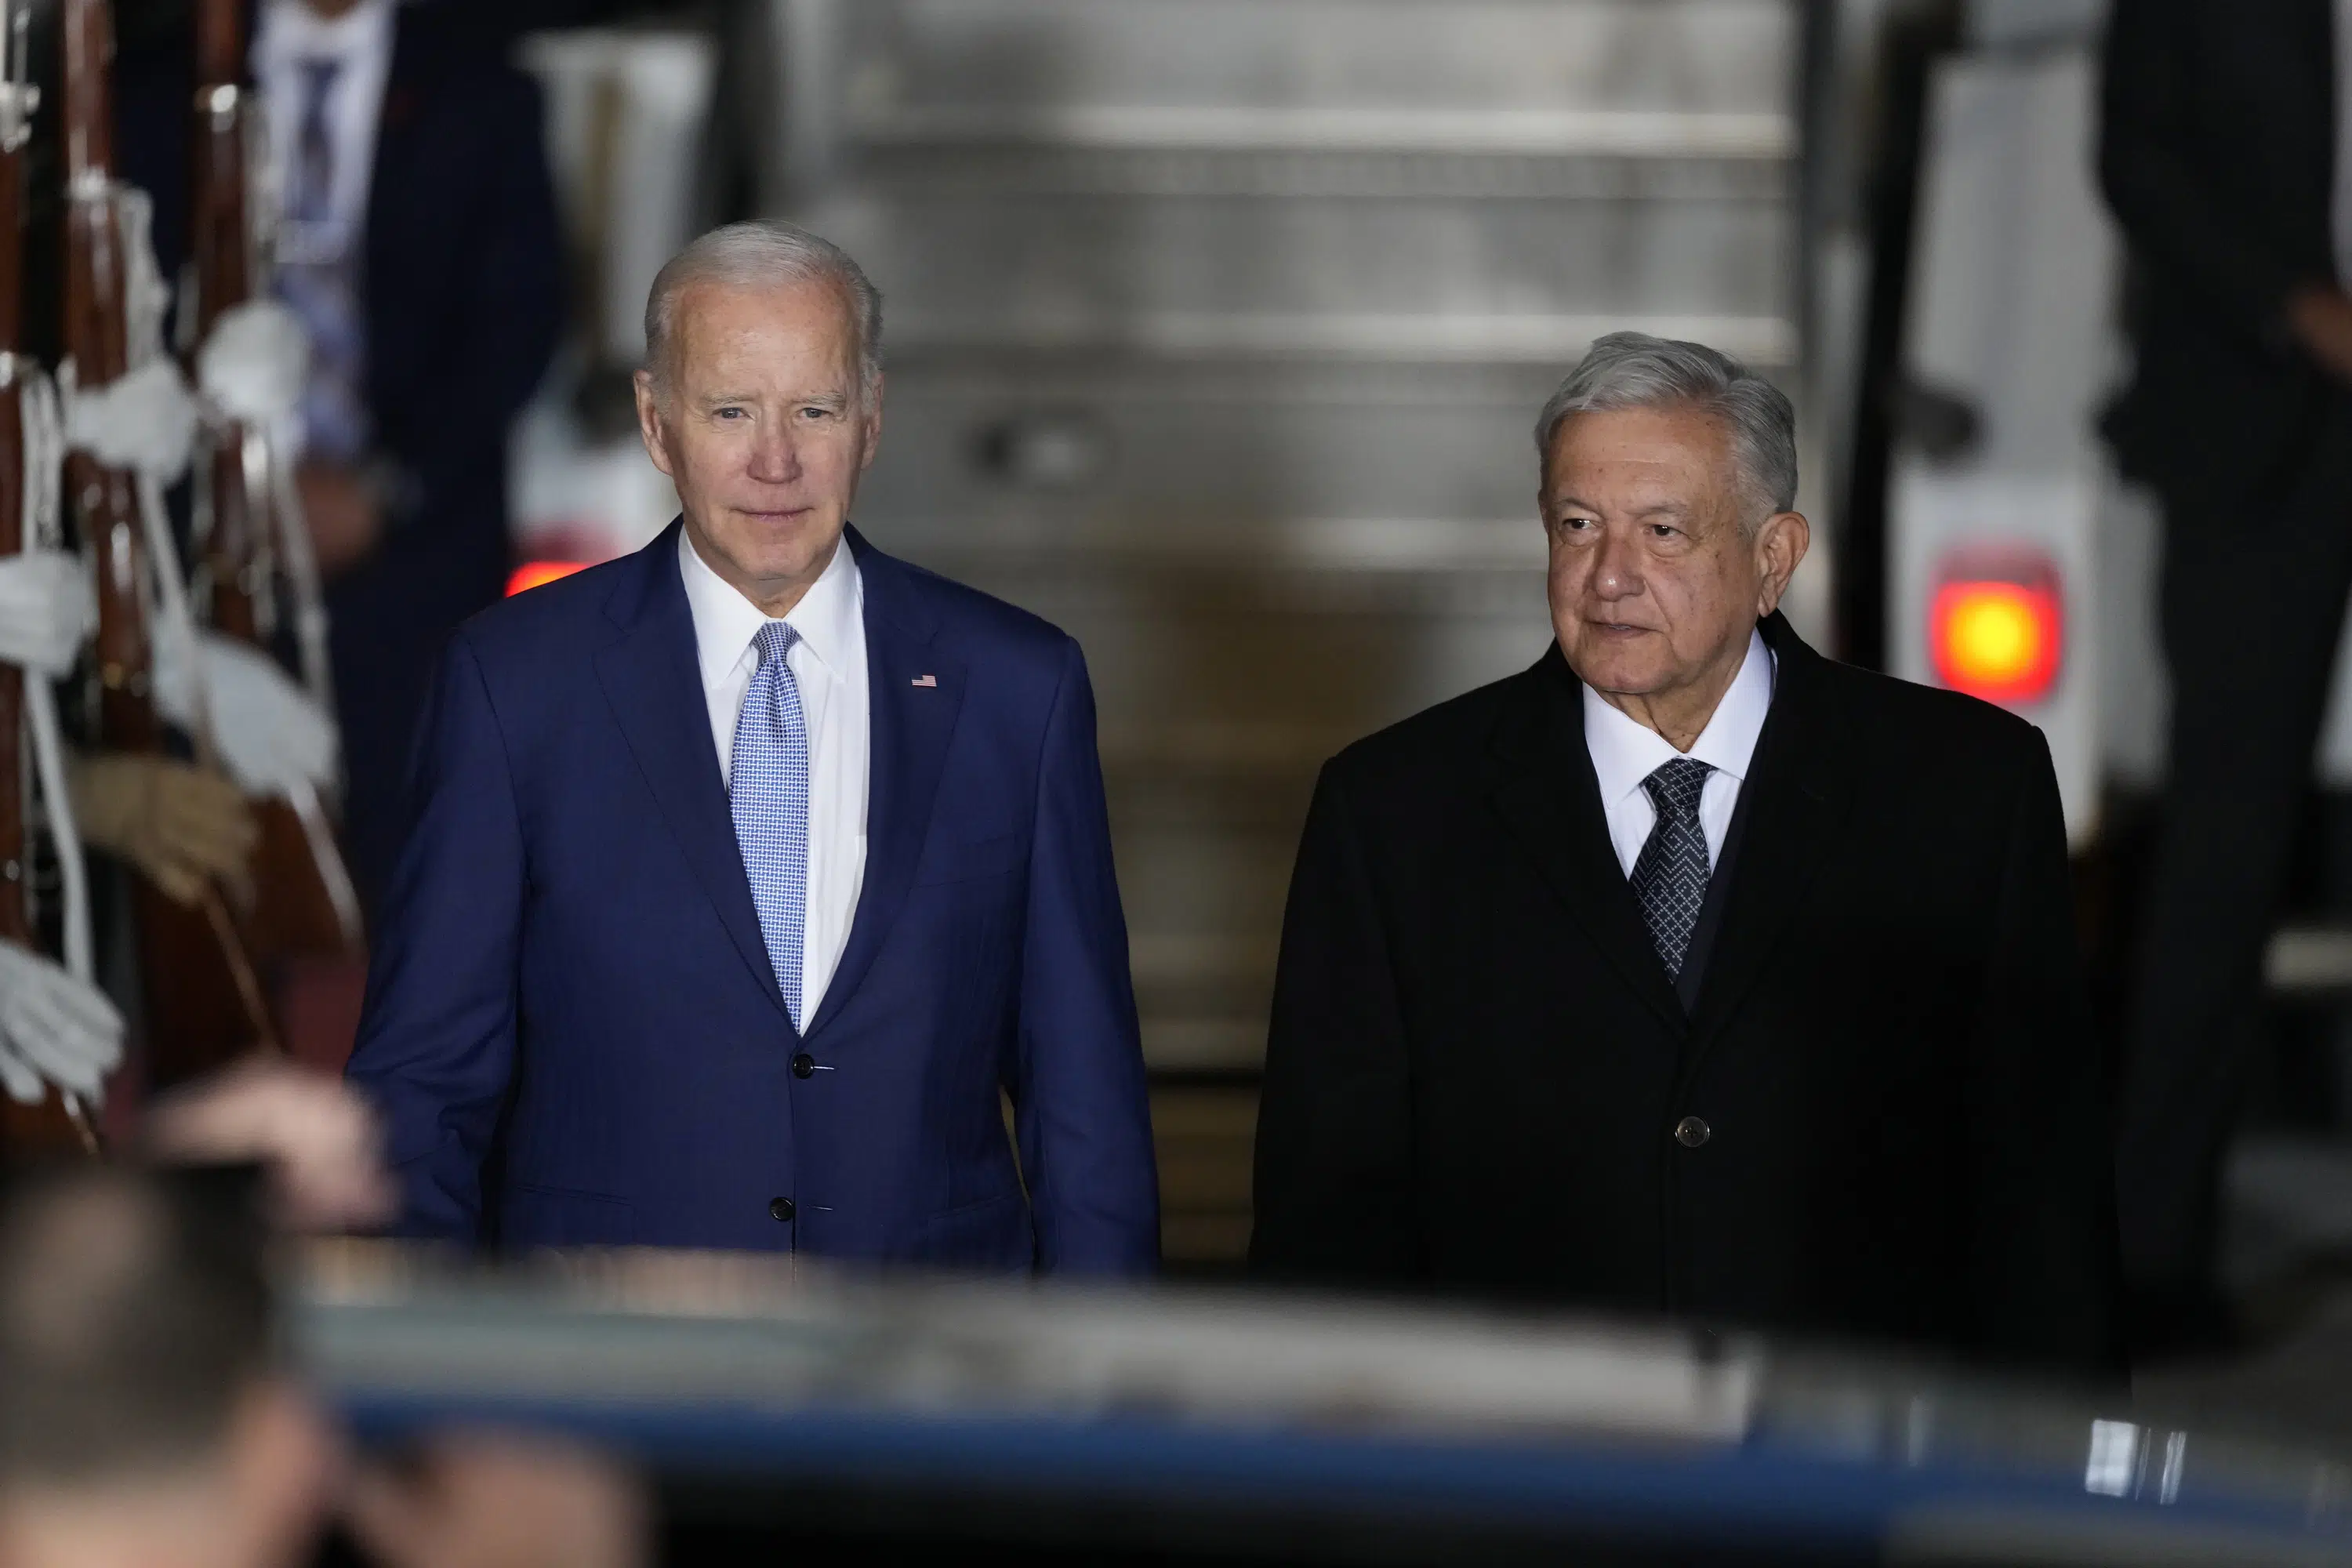 Biden flies in to López Obrador's new airport for summit